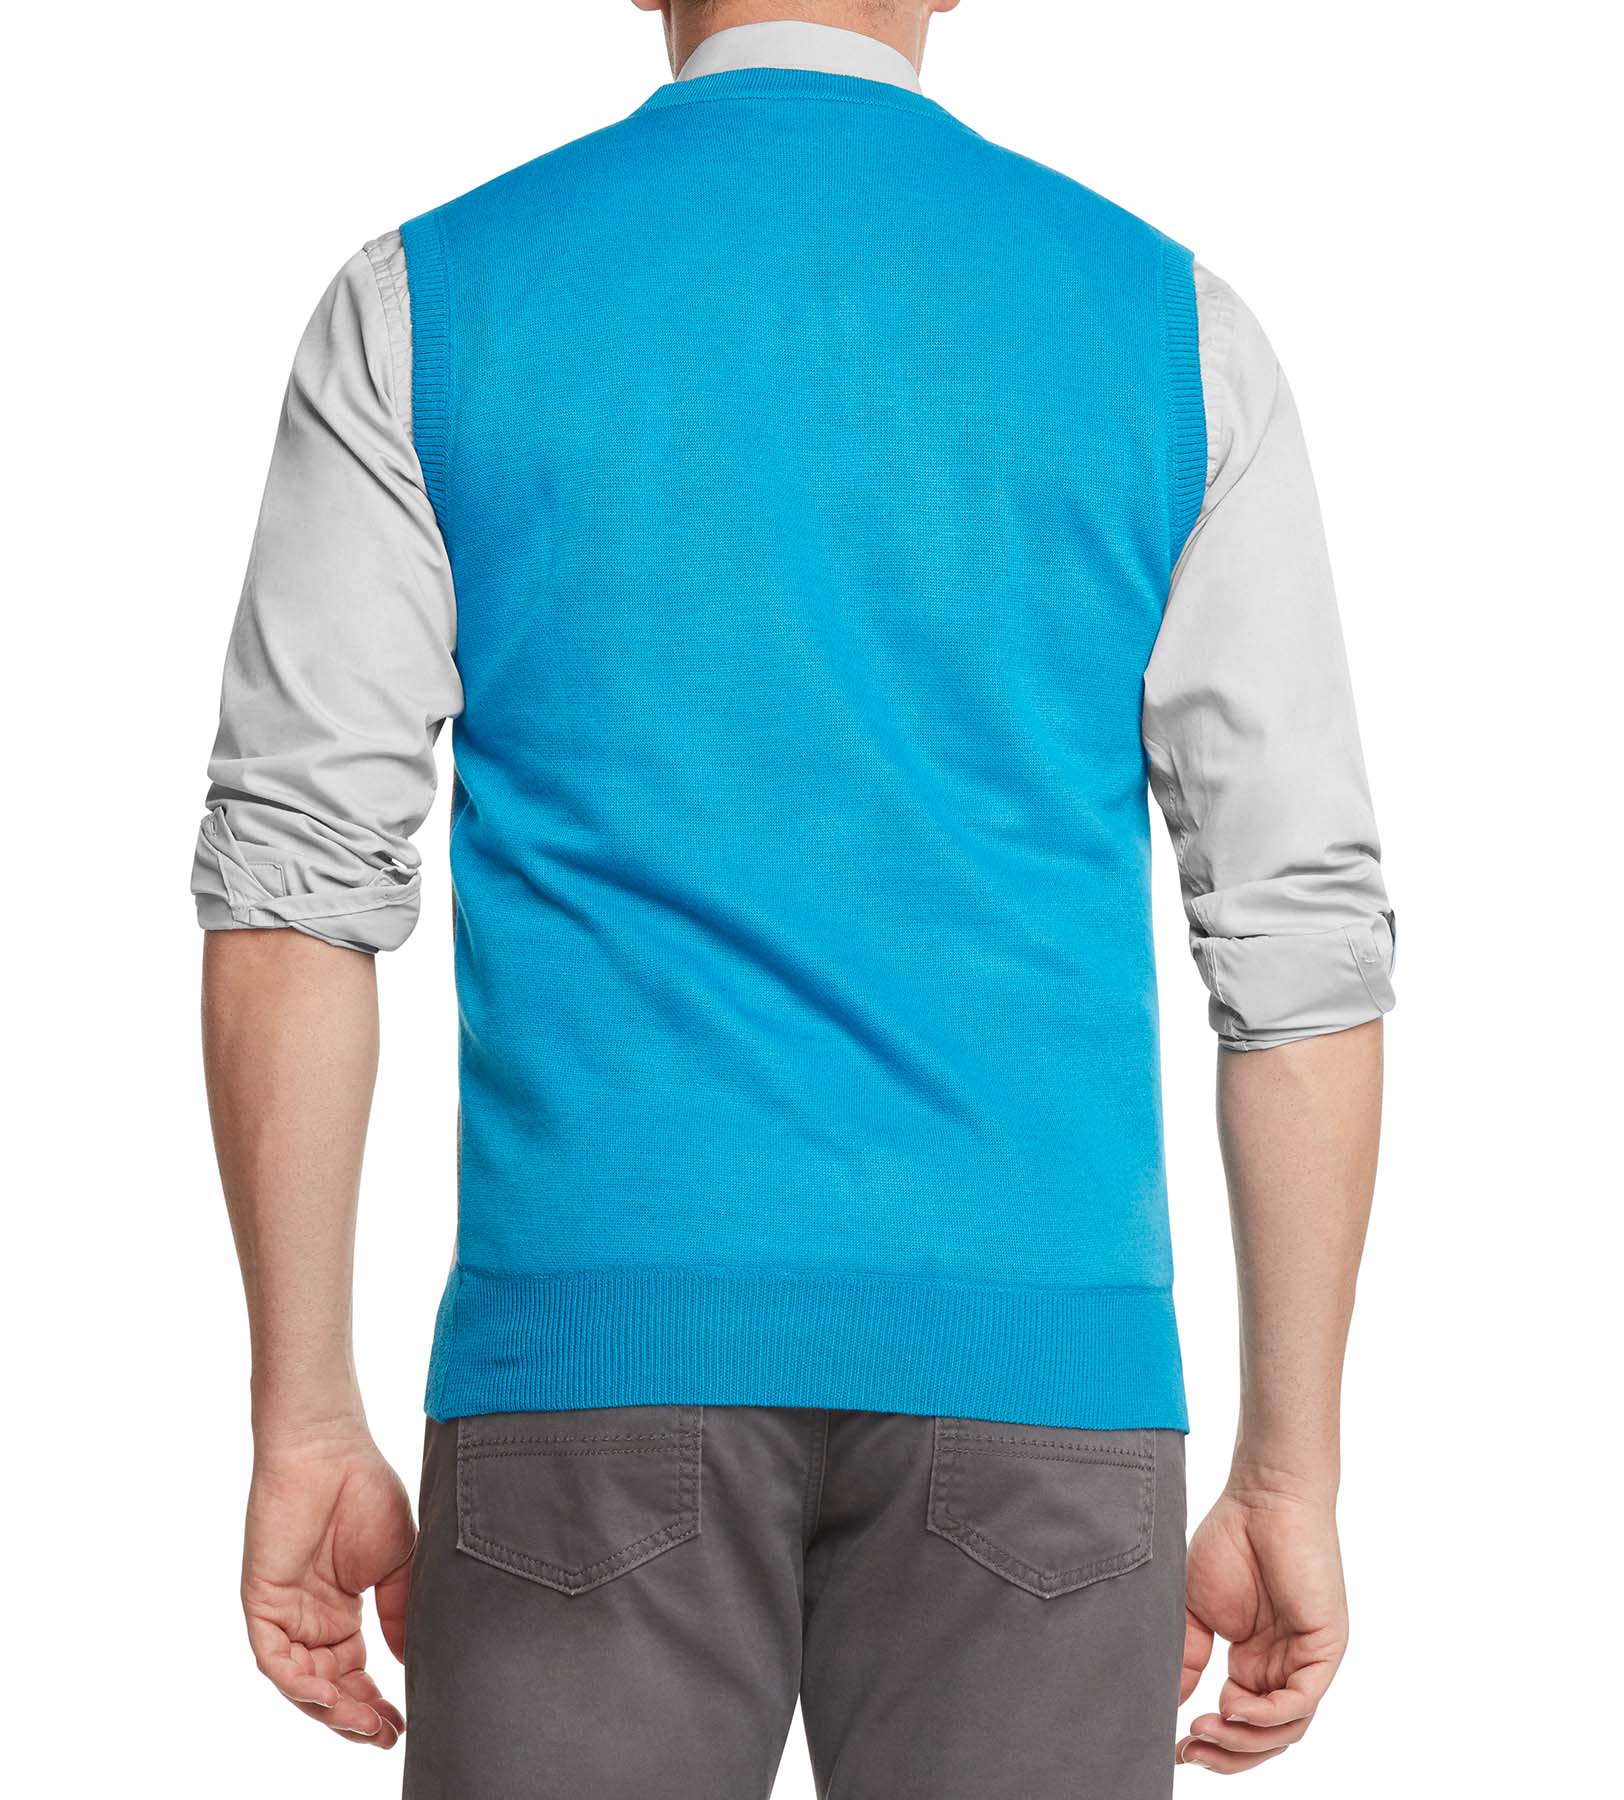 True Rock Men's Argyle V-Neck Sweater Vest (Turquoise/Gray, X-Large) - image 3 of 4